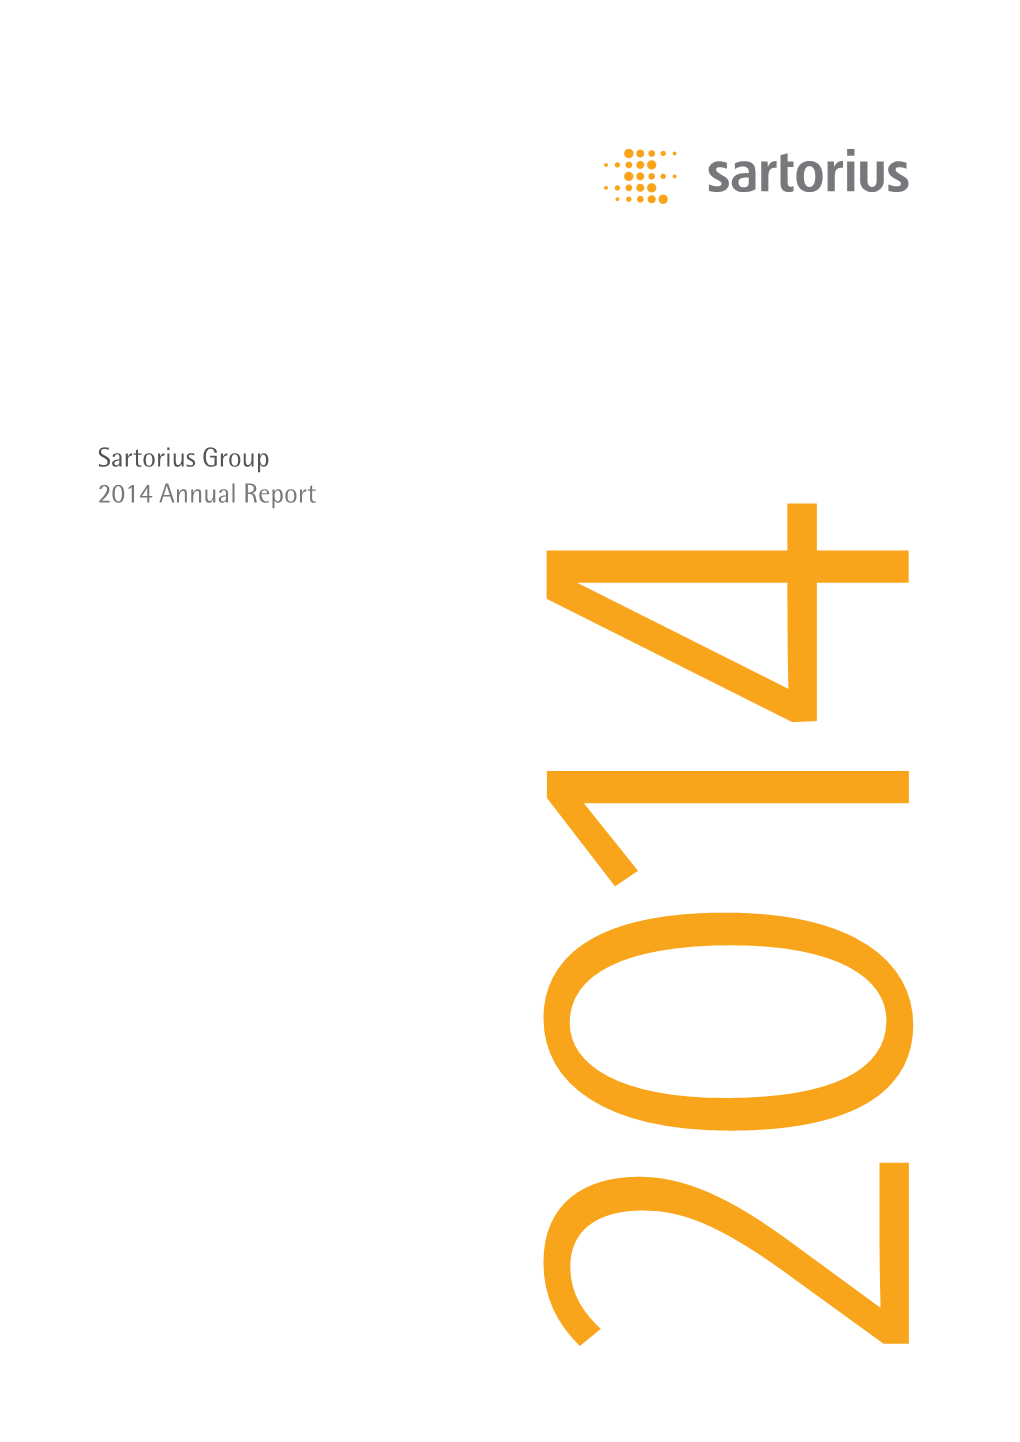 Sartorius Group 2014 Annual Report ©Sartorius AG | Printed in Germany | Publication No